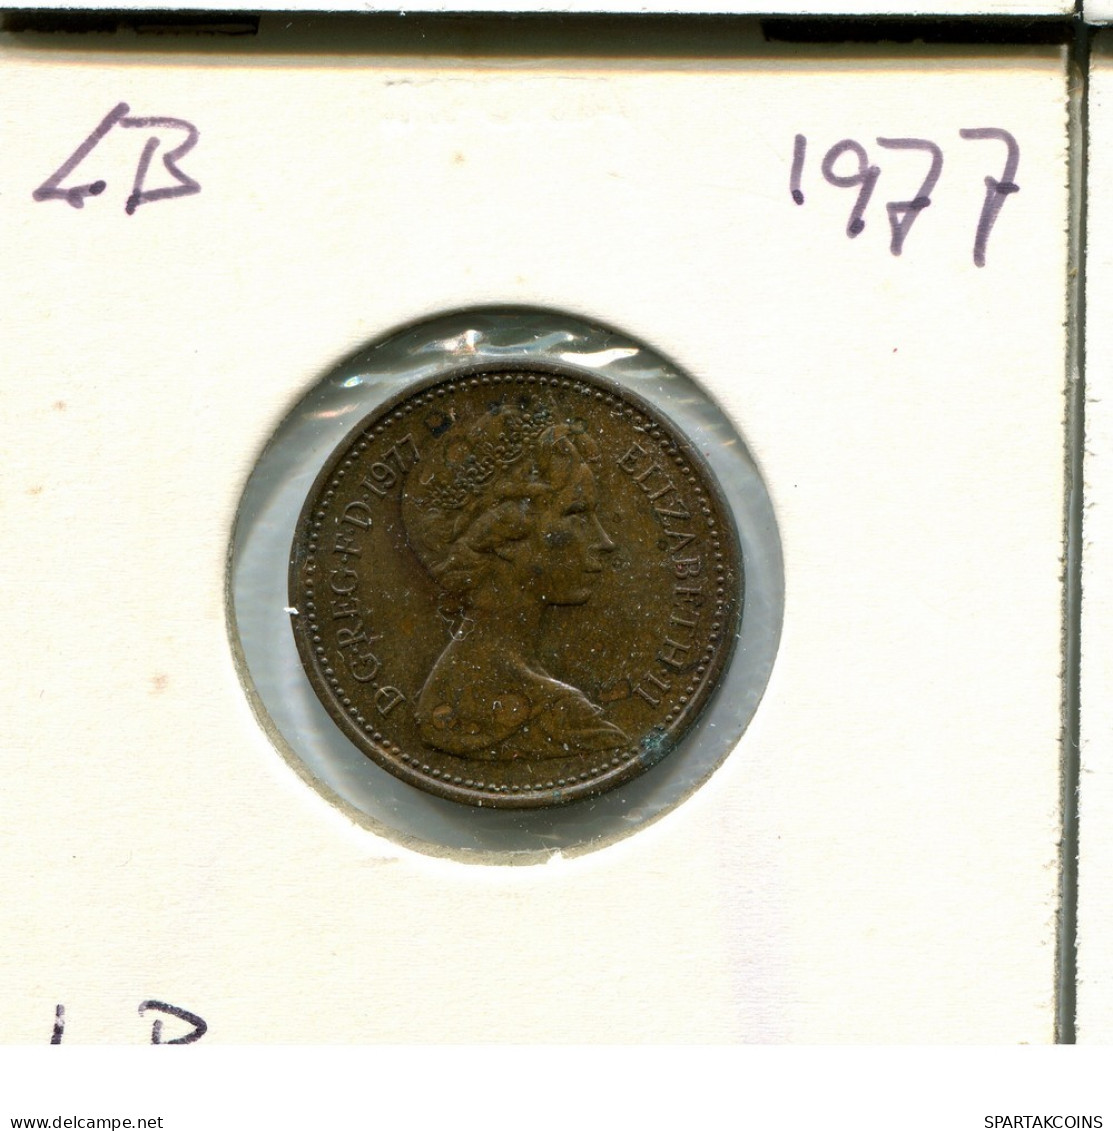 NEW PENNY 1977 UK GBAN BRETAÑA GREAT BRITAIN Moneda #AU804.E.A - 1 Penny & 1 New Penny